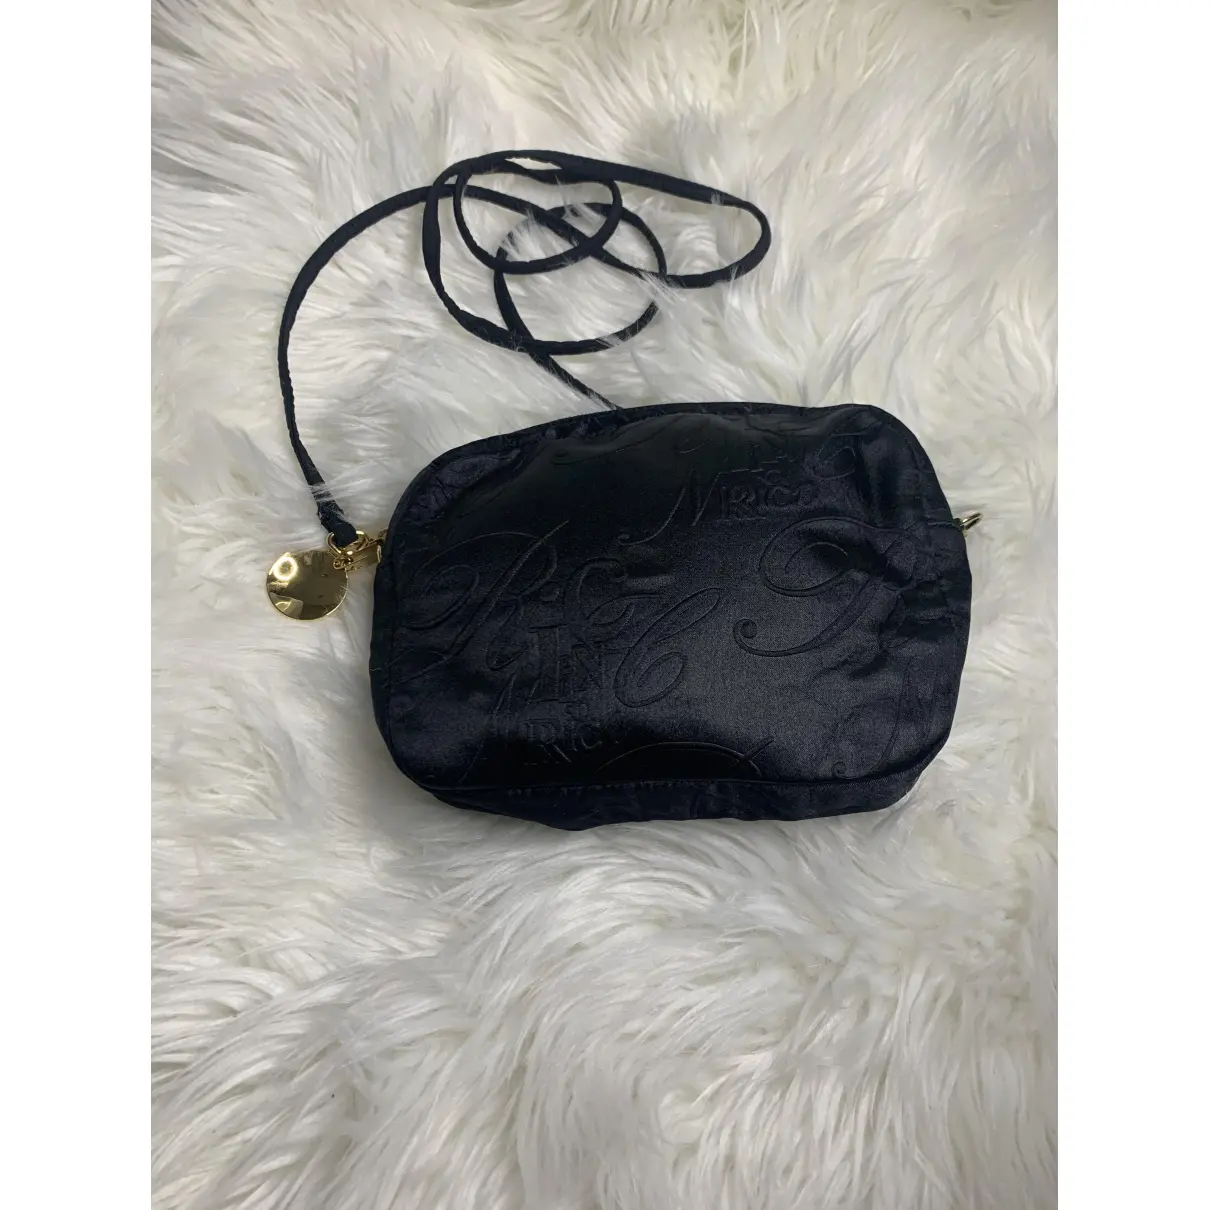 Buy Nina Ricci Cloth crossbody bag online